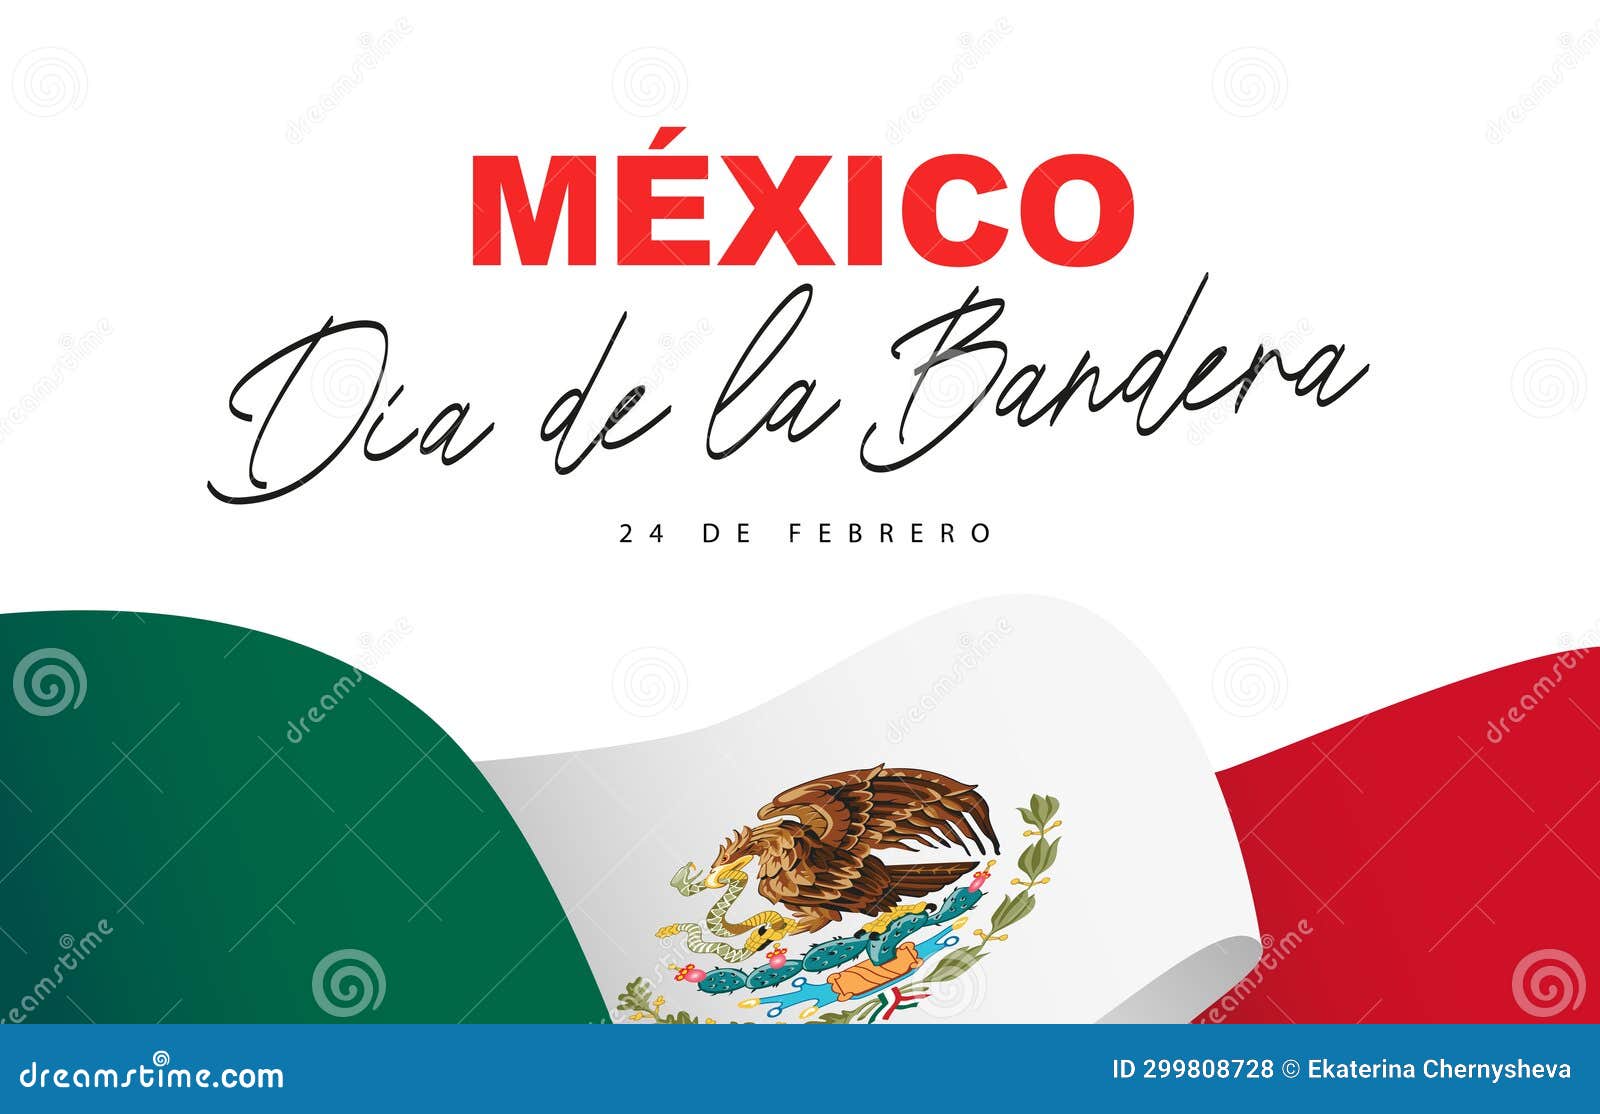 canvas of the mexican flag. inscription in spanish - mexico, dia de la bandera, mexican flag day, february 24